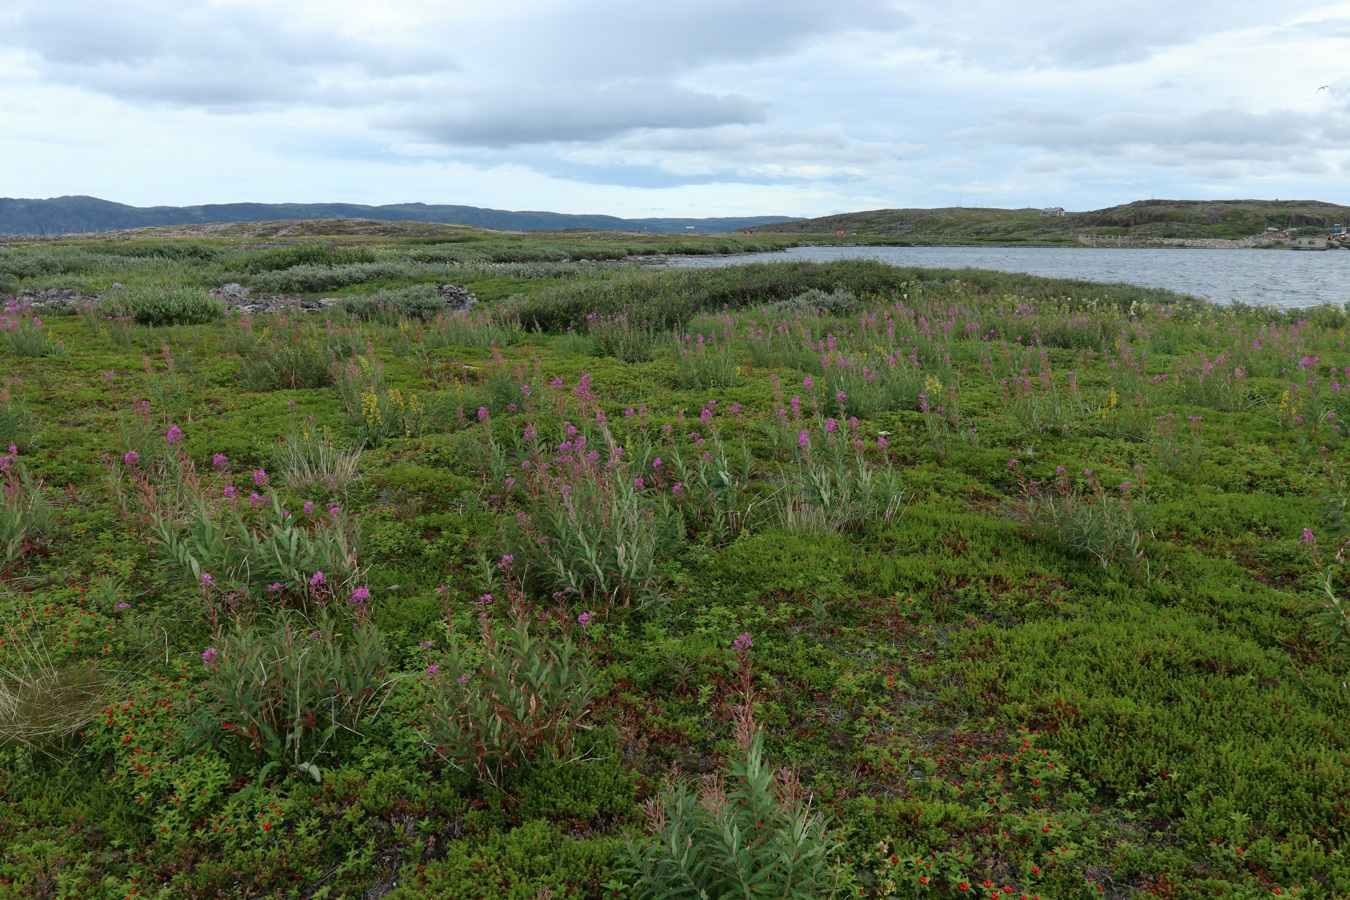 Териберка, image of landscape/habitat.